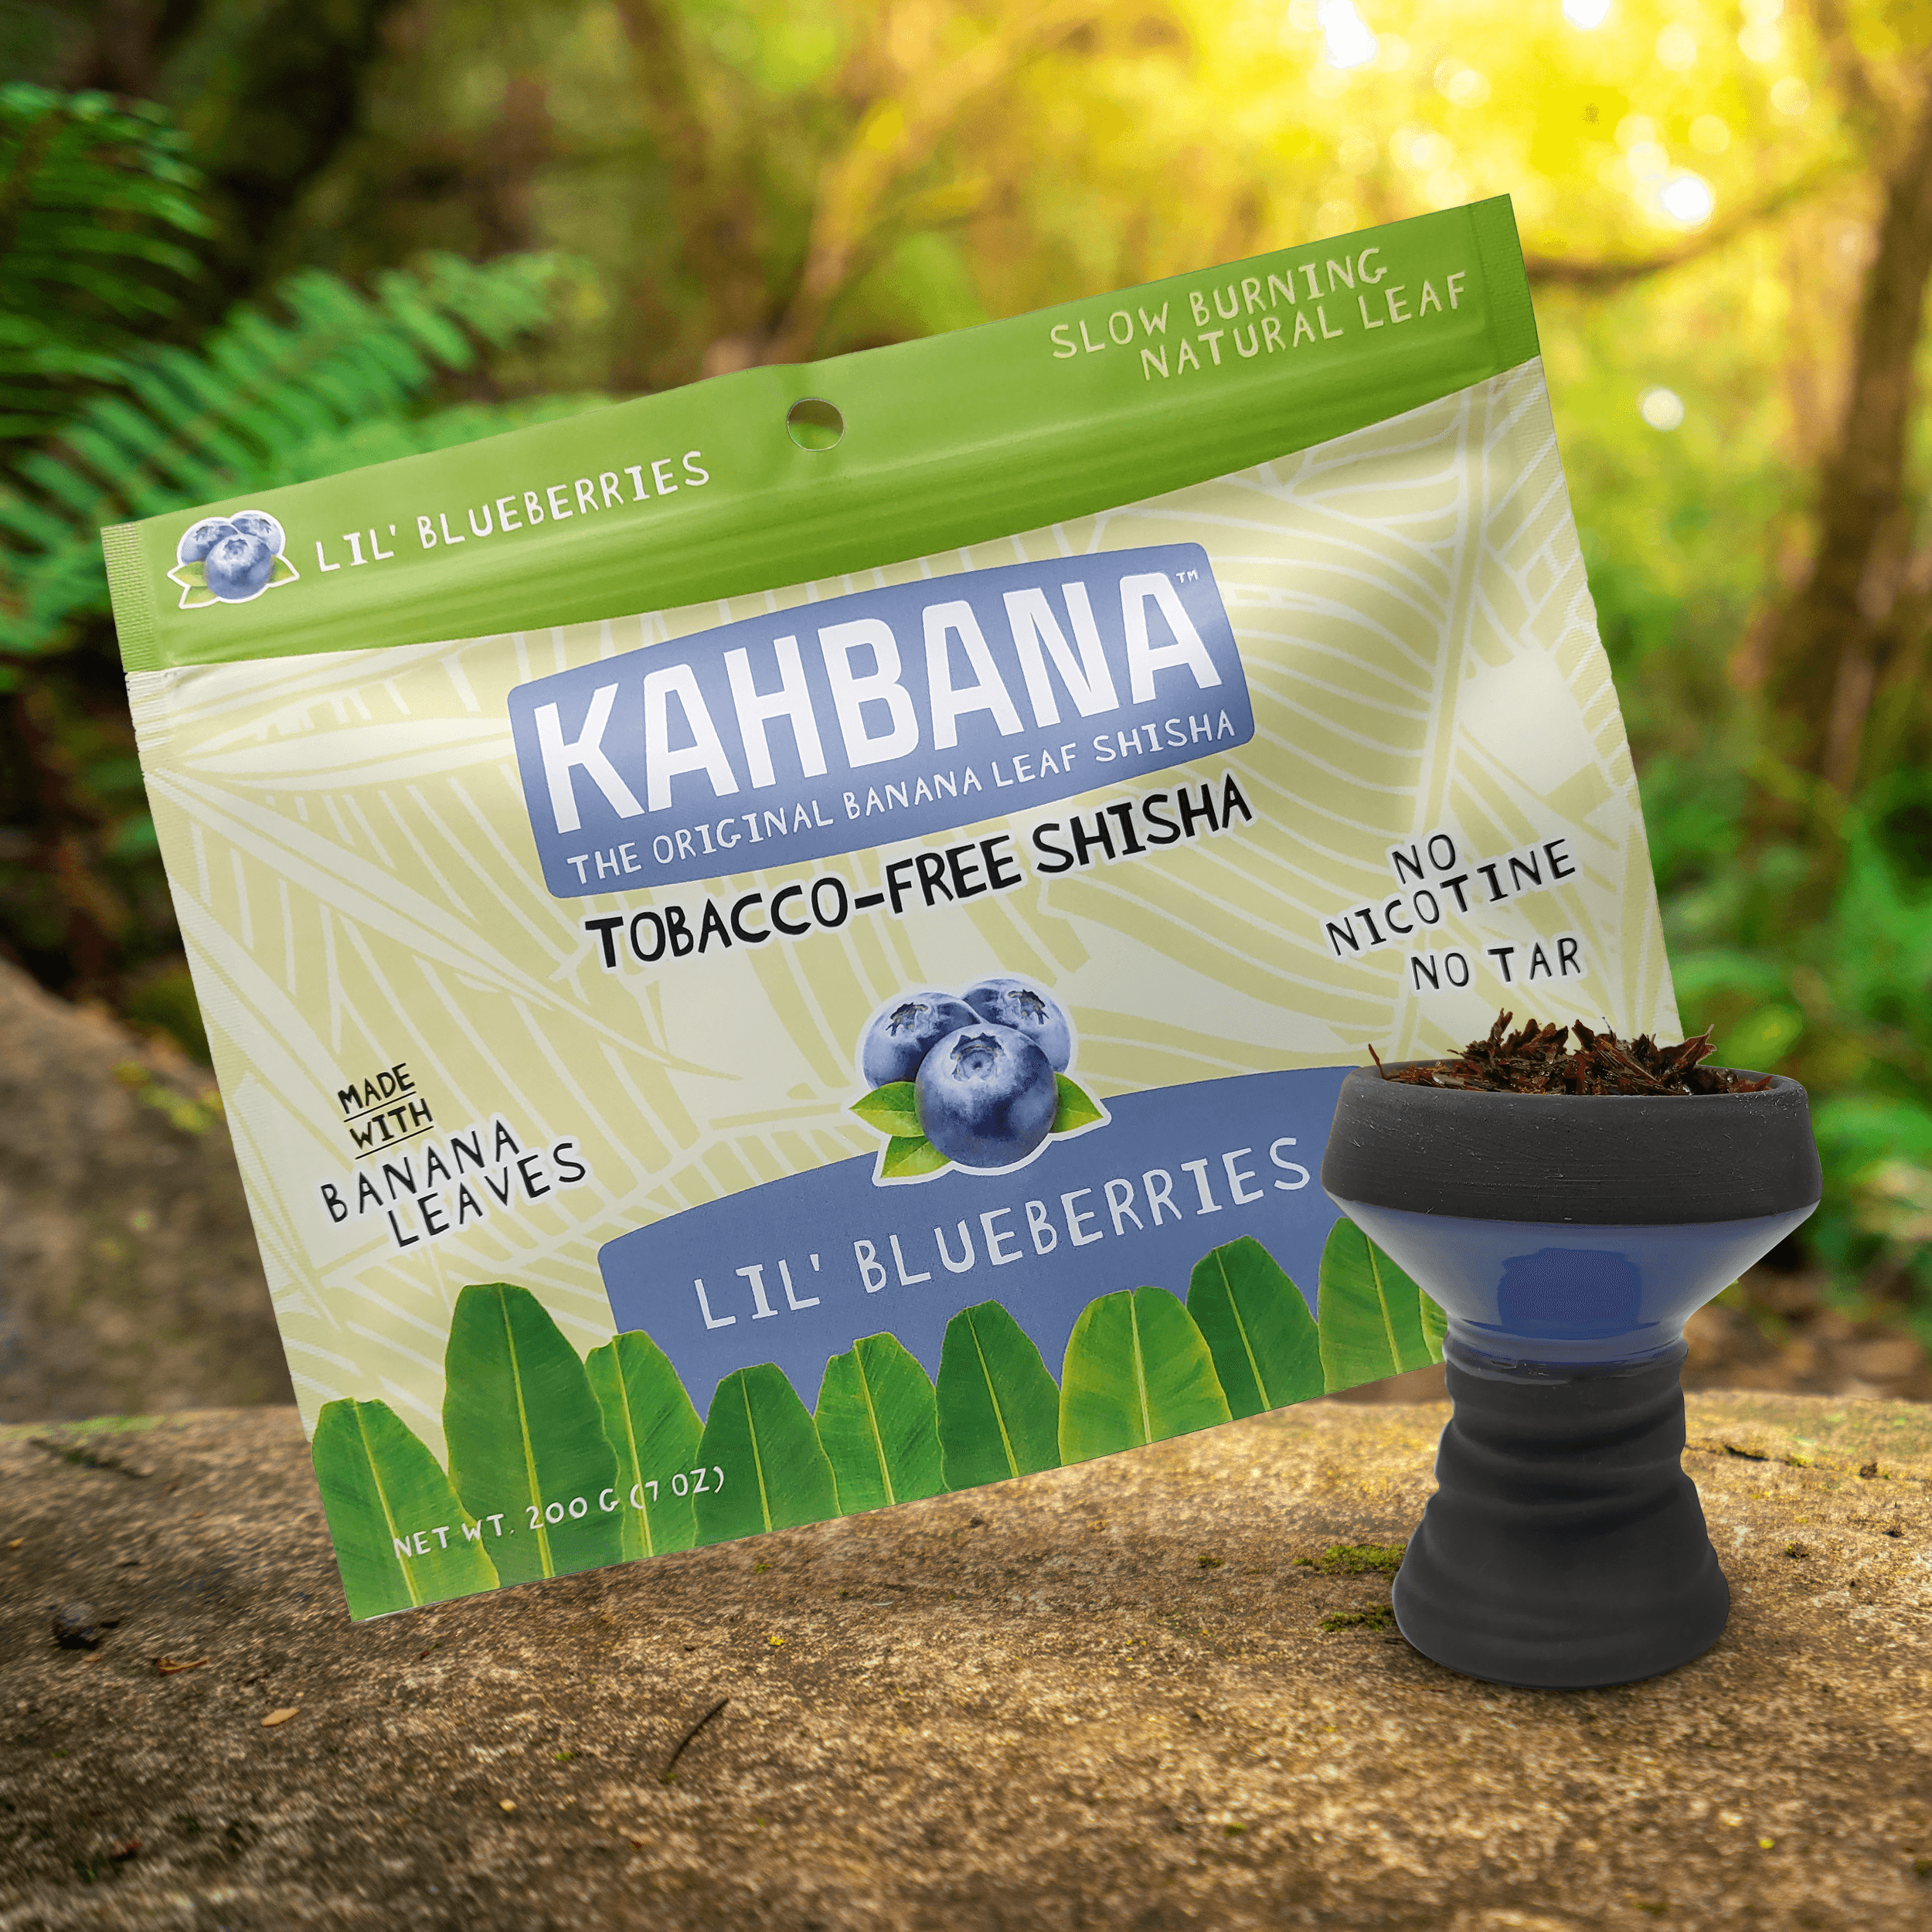 KAHBANA Original Banana Leaf Shisha Lil' Blueberries - Lavoo